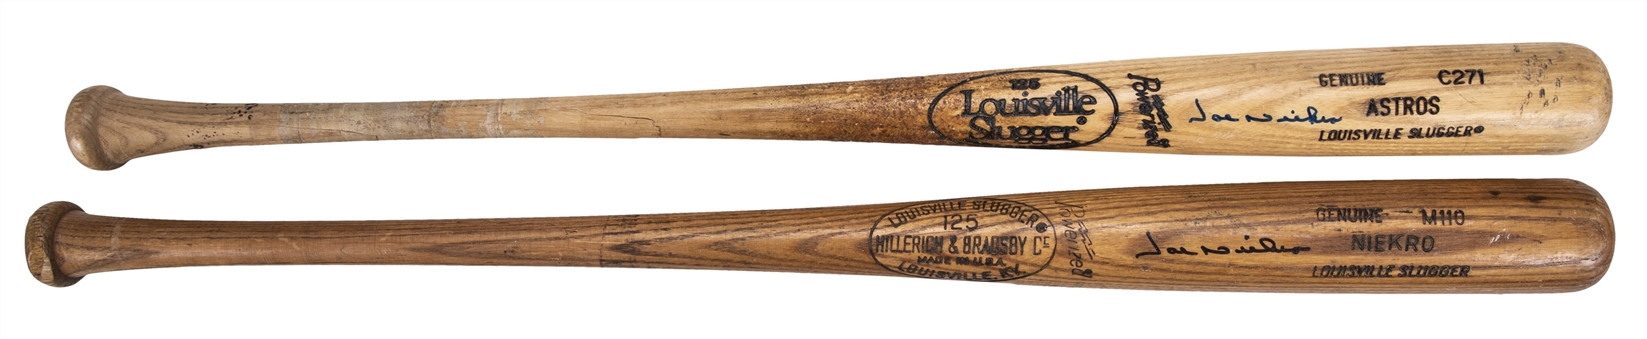 Lot of (2) Joe Niekro Houston Astros Bats Including Game Used and Signed 1977-79 HB M110 Model Bat (PSA/DNA GU 8 & JSA)